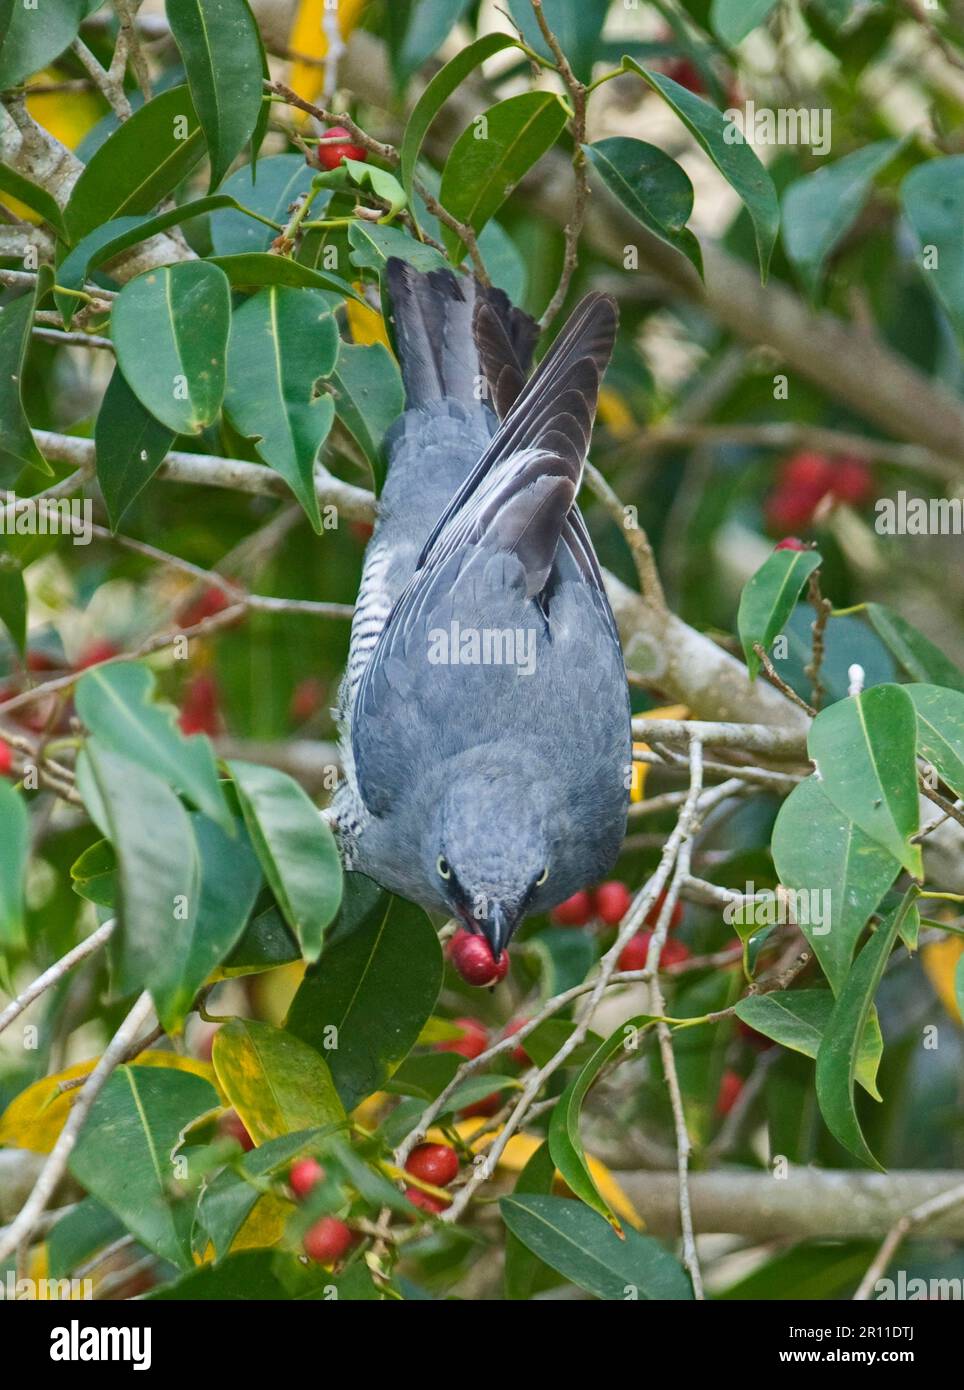 Barred cuckooshrike (Coracina lineata), Songbirds, Animals, Birds, Barred Cuckoo-shrike adult, feeding on figs in tree, Queensland, Australia Stock Photo